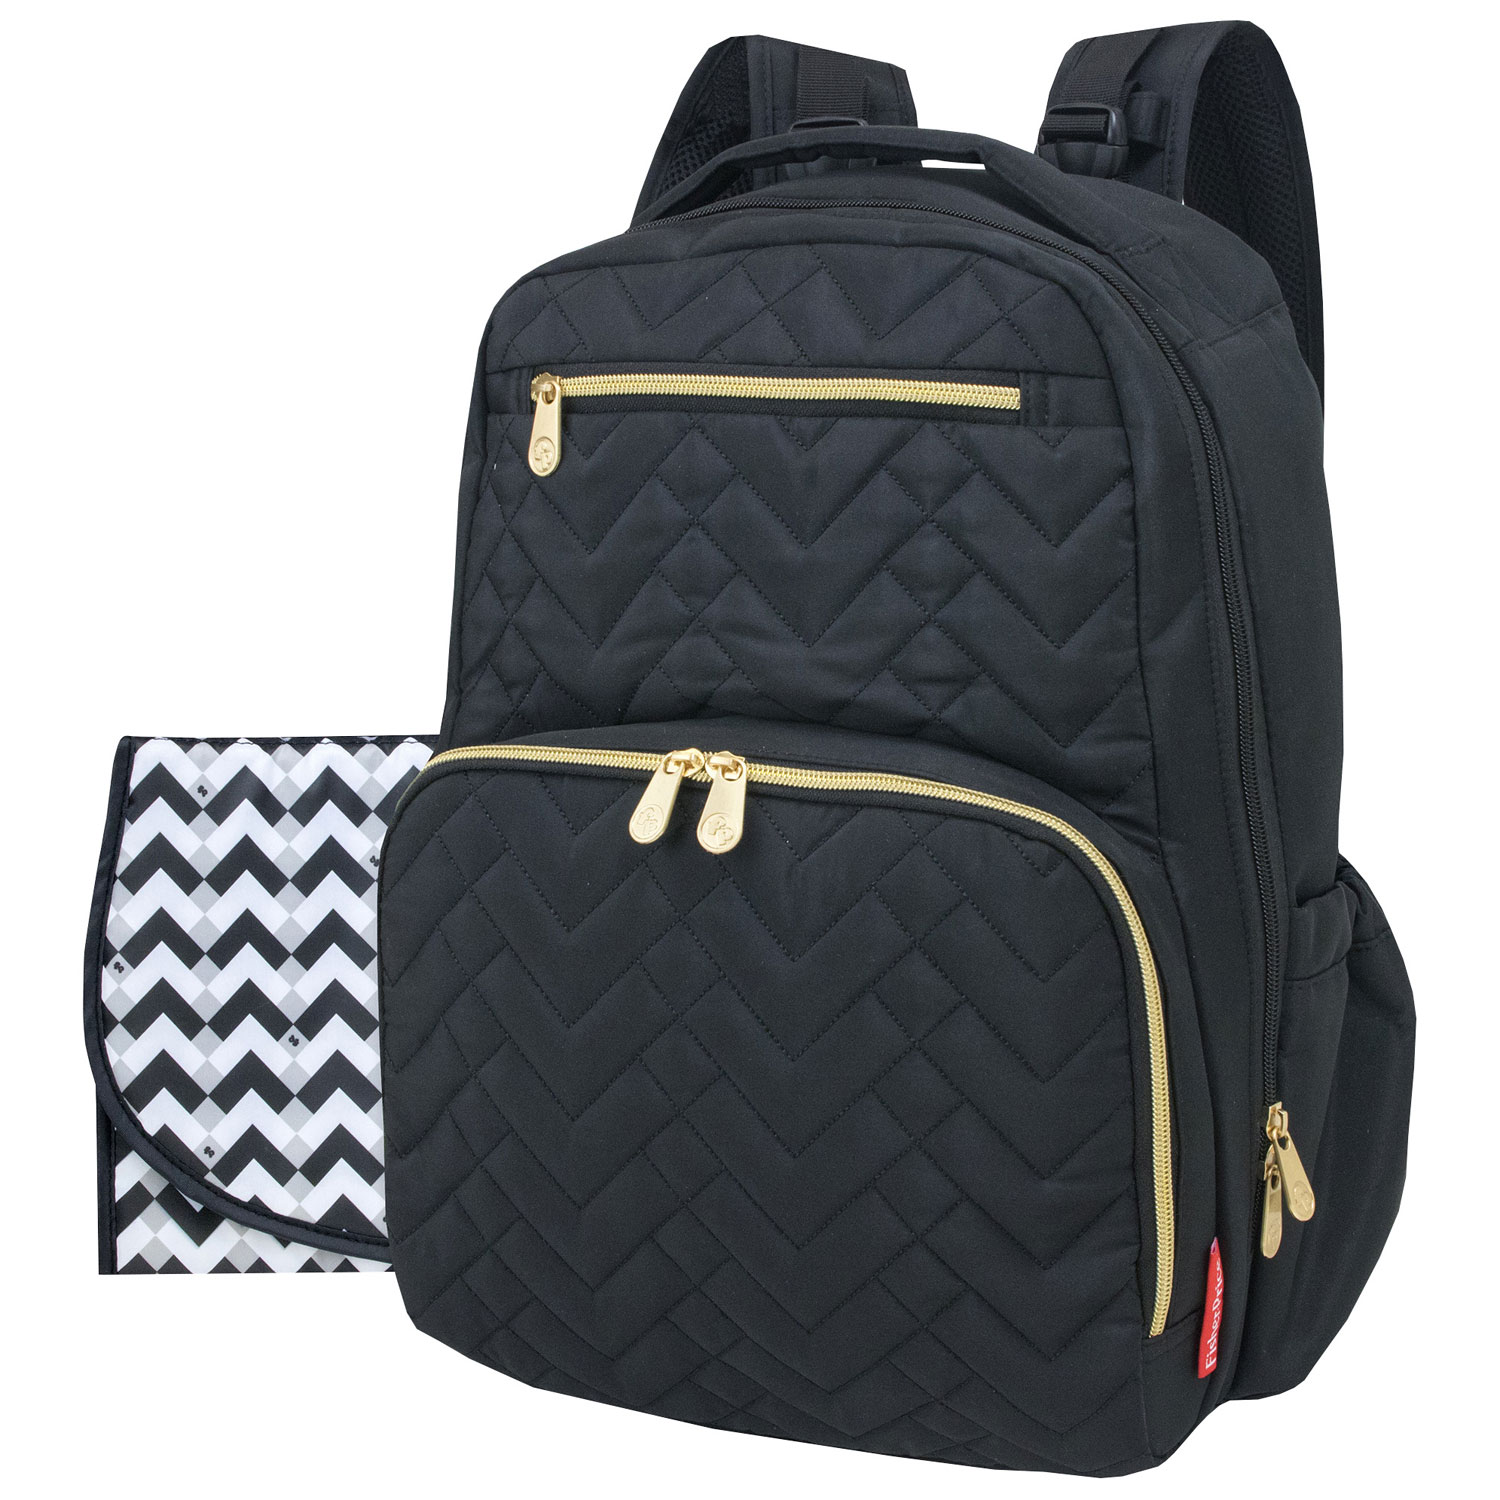 Fisher-Price Morgan Backpack Diaper Bag - White/Black/Grey